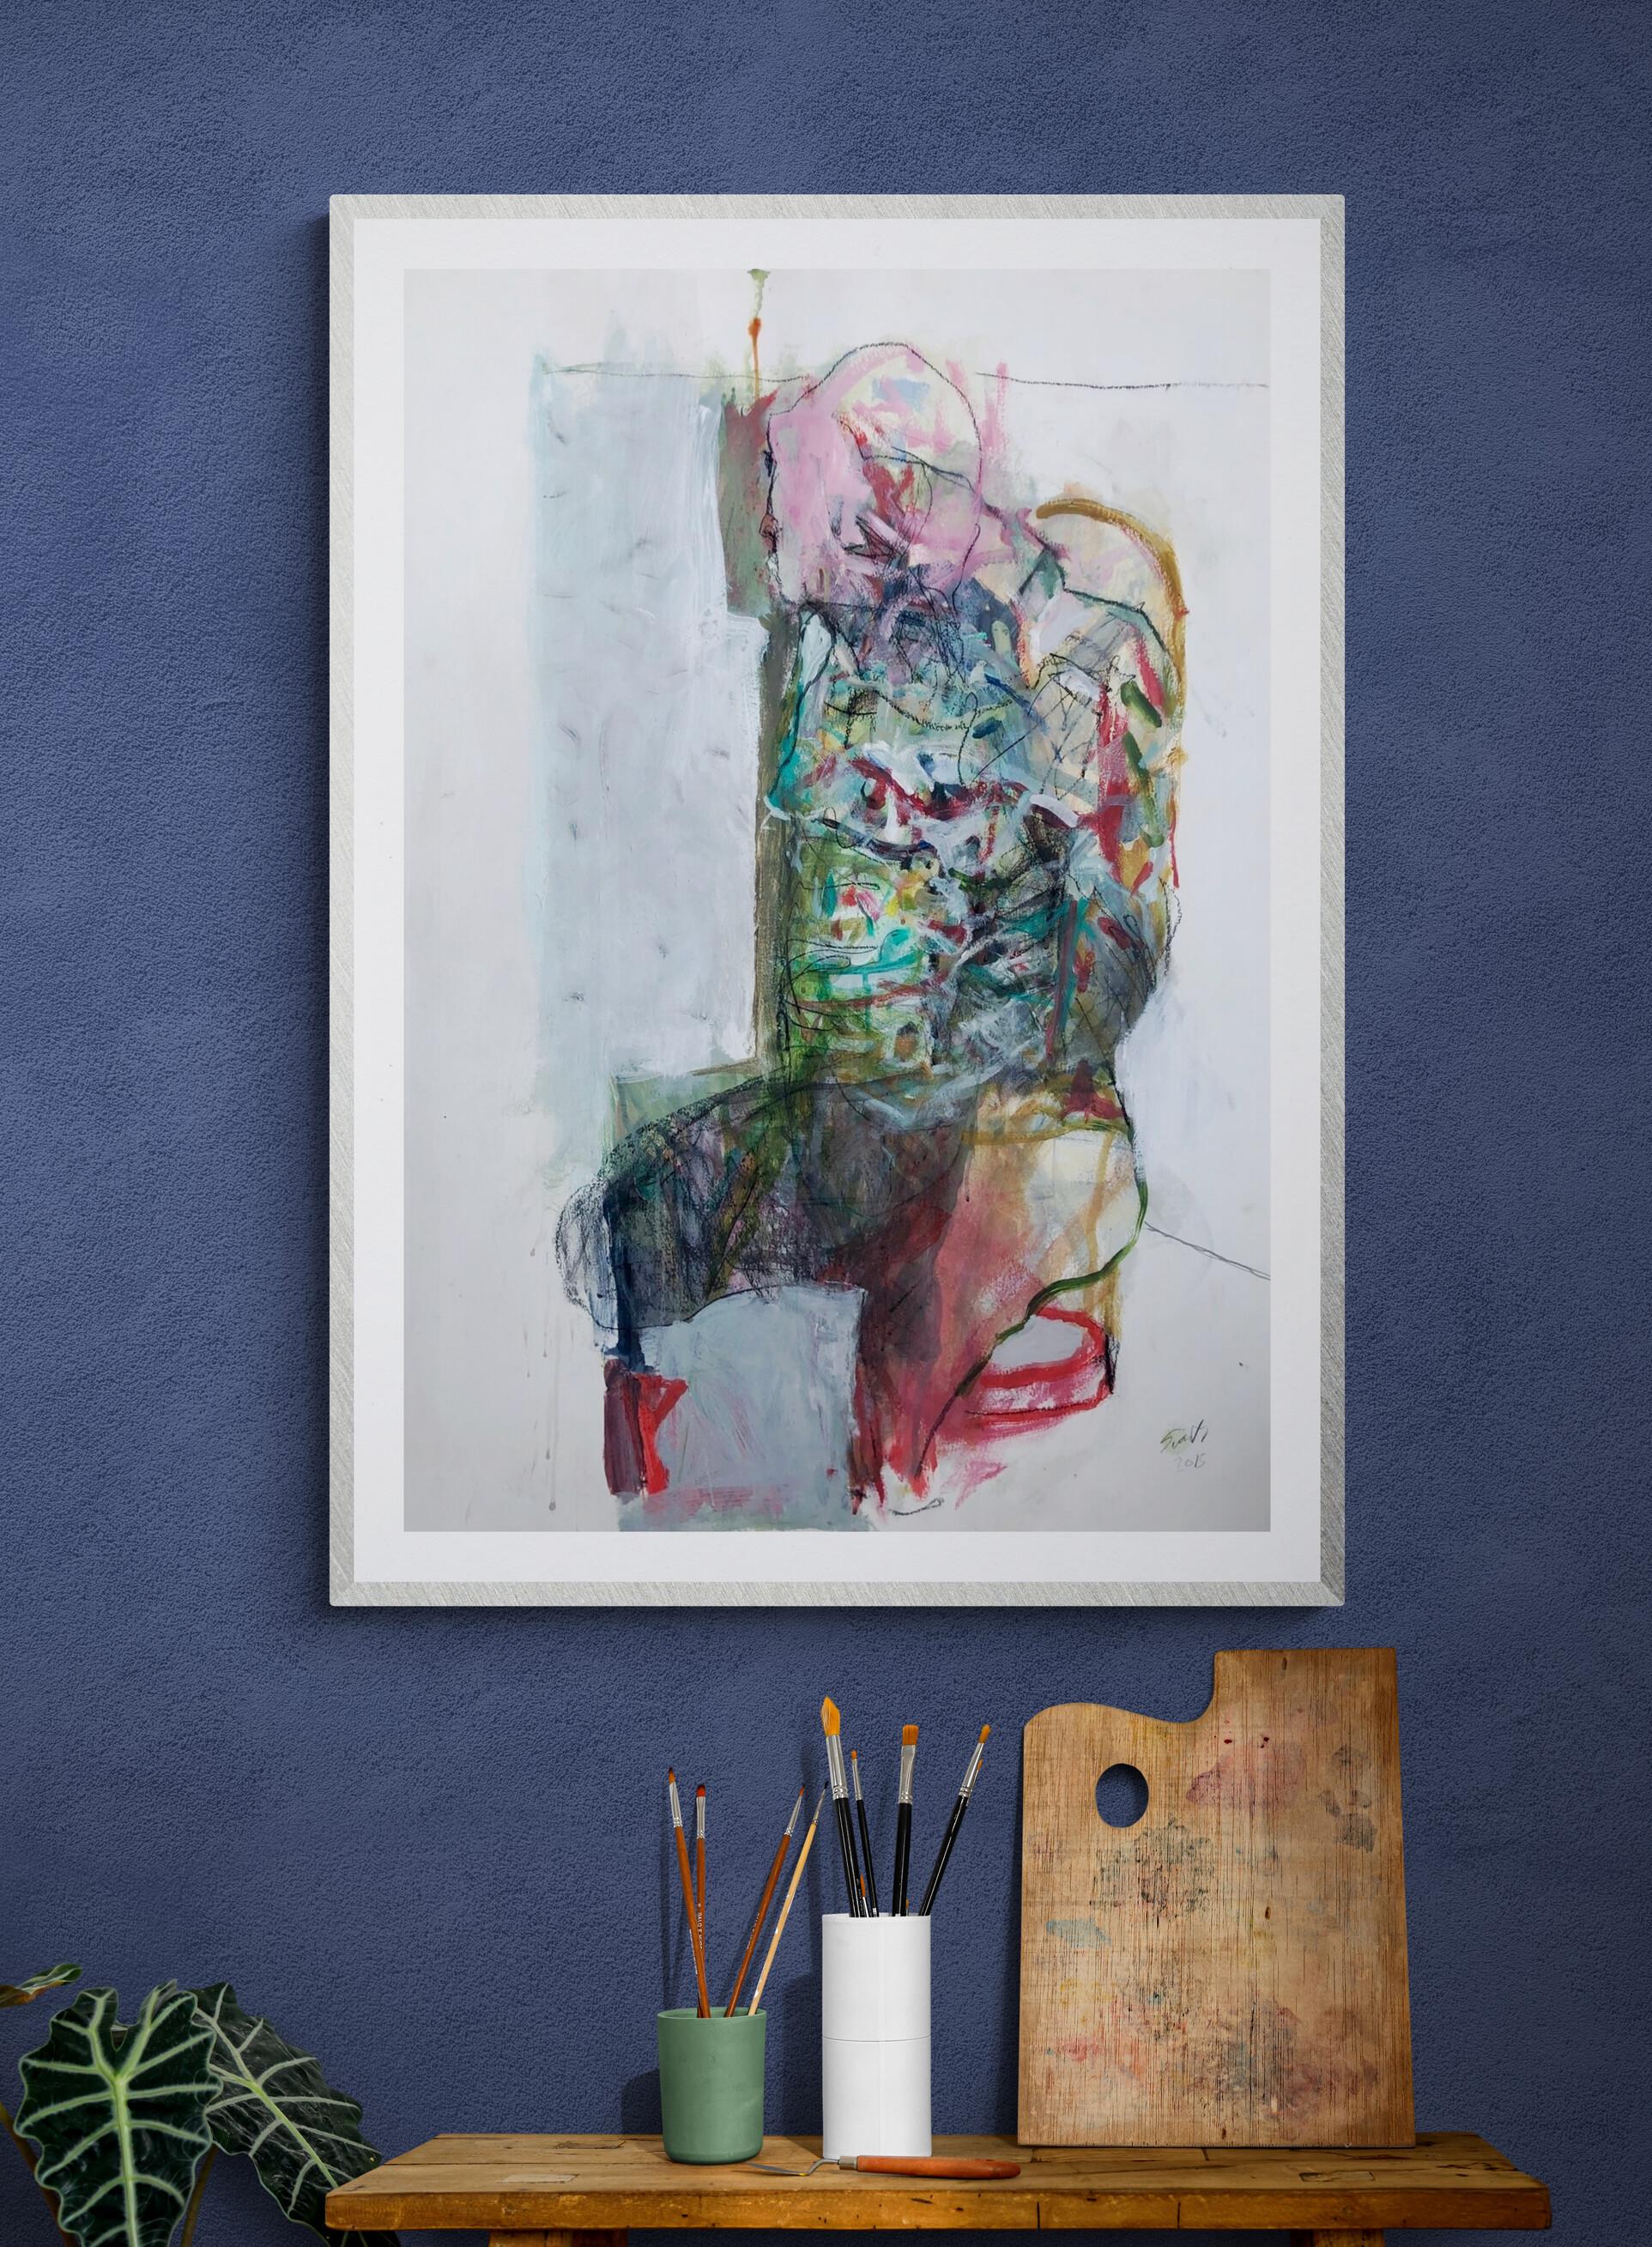 Peinture figurative abstraite expressive sur papier Fabriano « Inconnu » - Painting de Ilana Seati